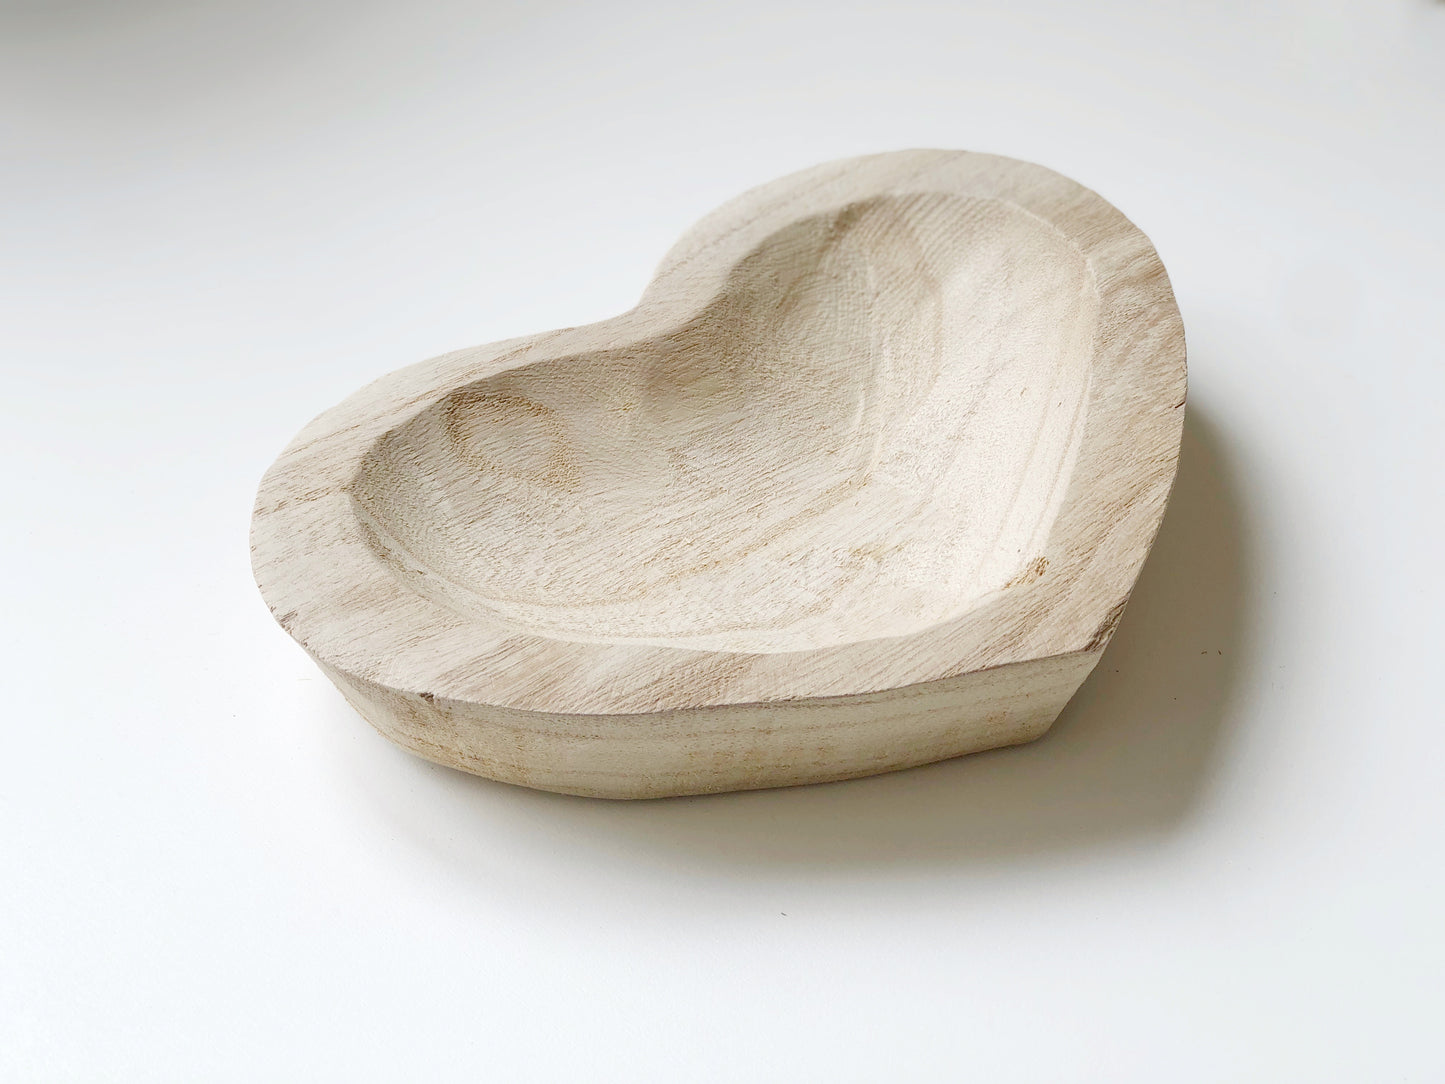 Wood Heart Bowl